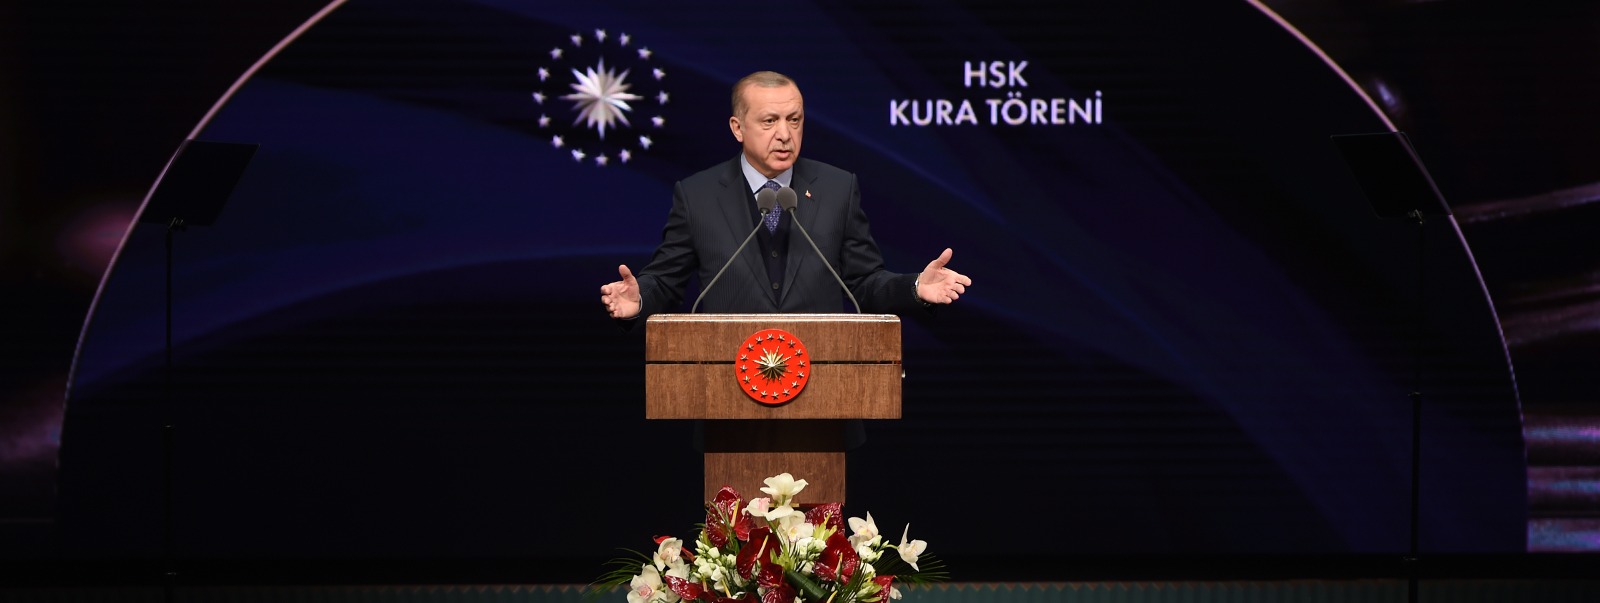 President of the Republic of Turkey, ERDOĞAN: Establishing justice has always been our number one priority